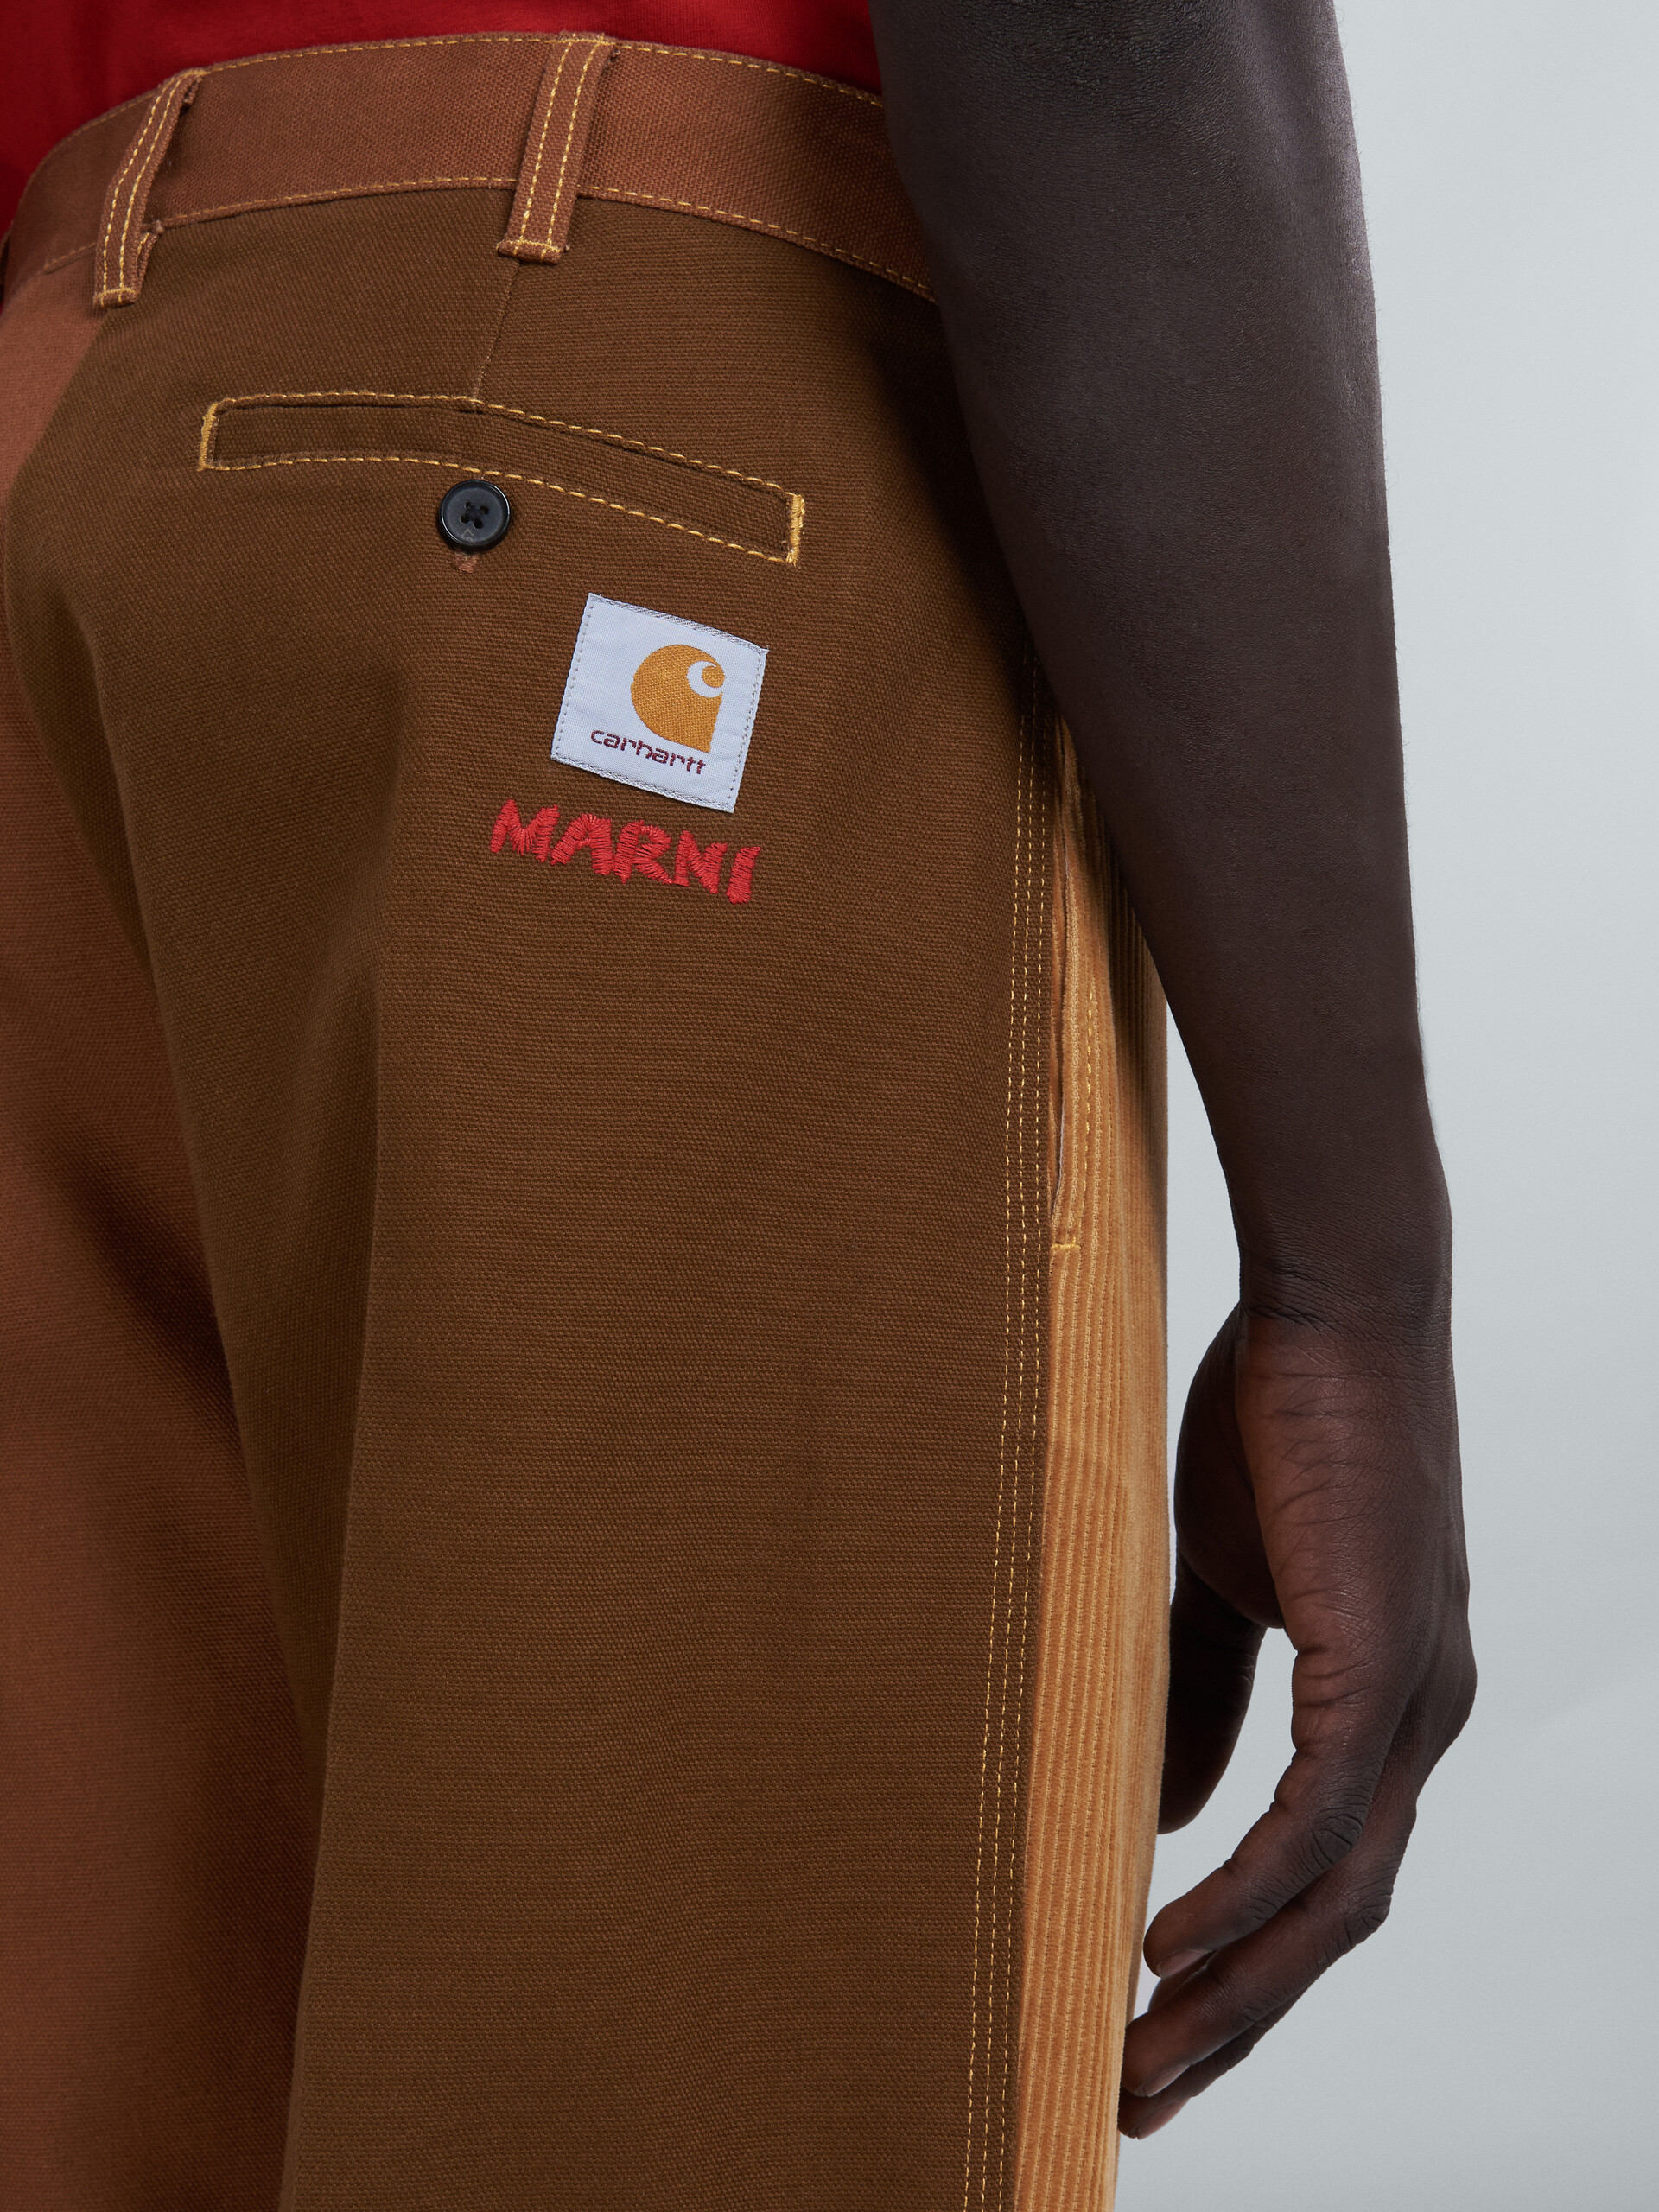 MARNI x CARHARTT WIP - brown colour-block trousers - Pants - Image 4